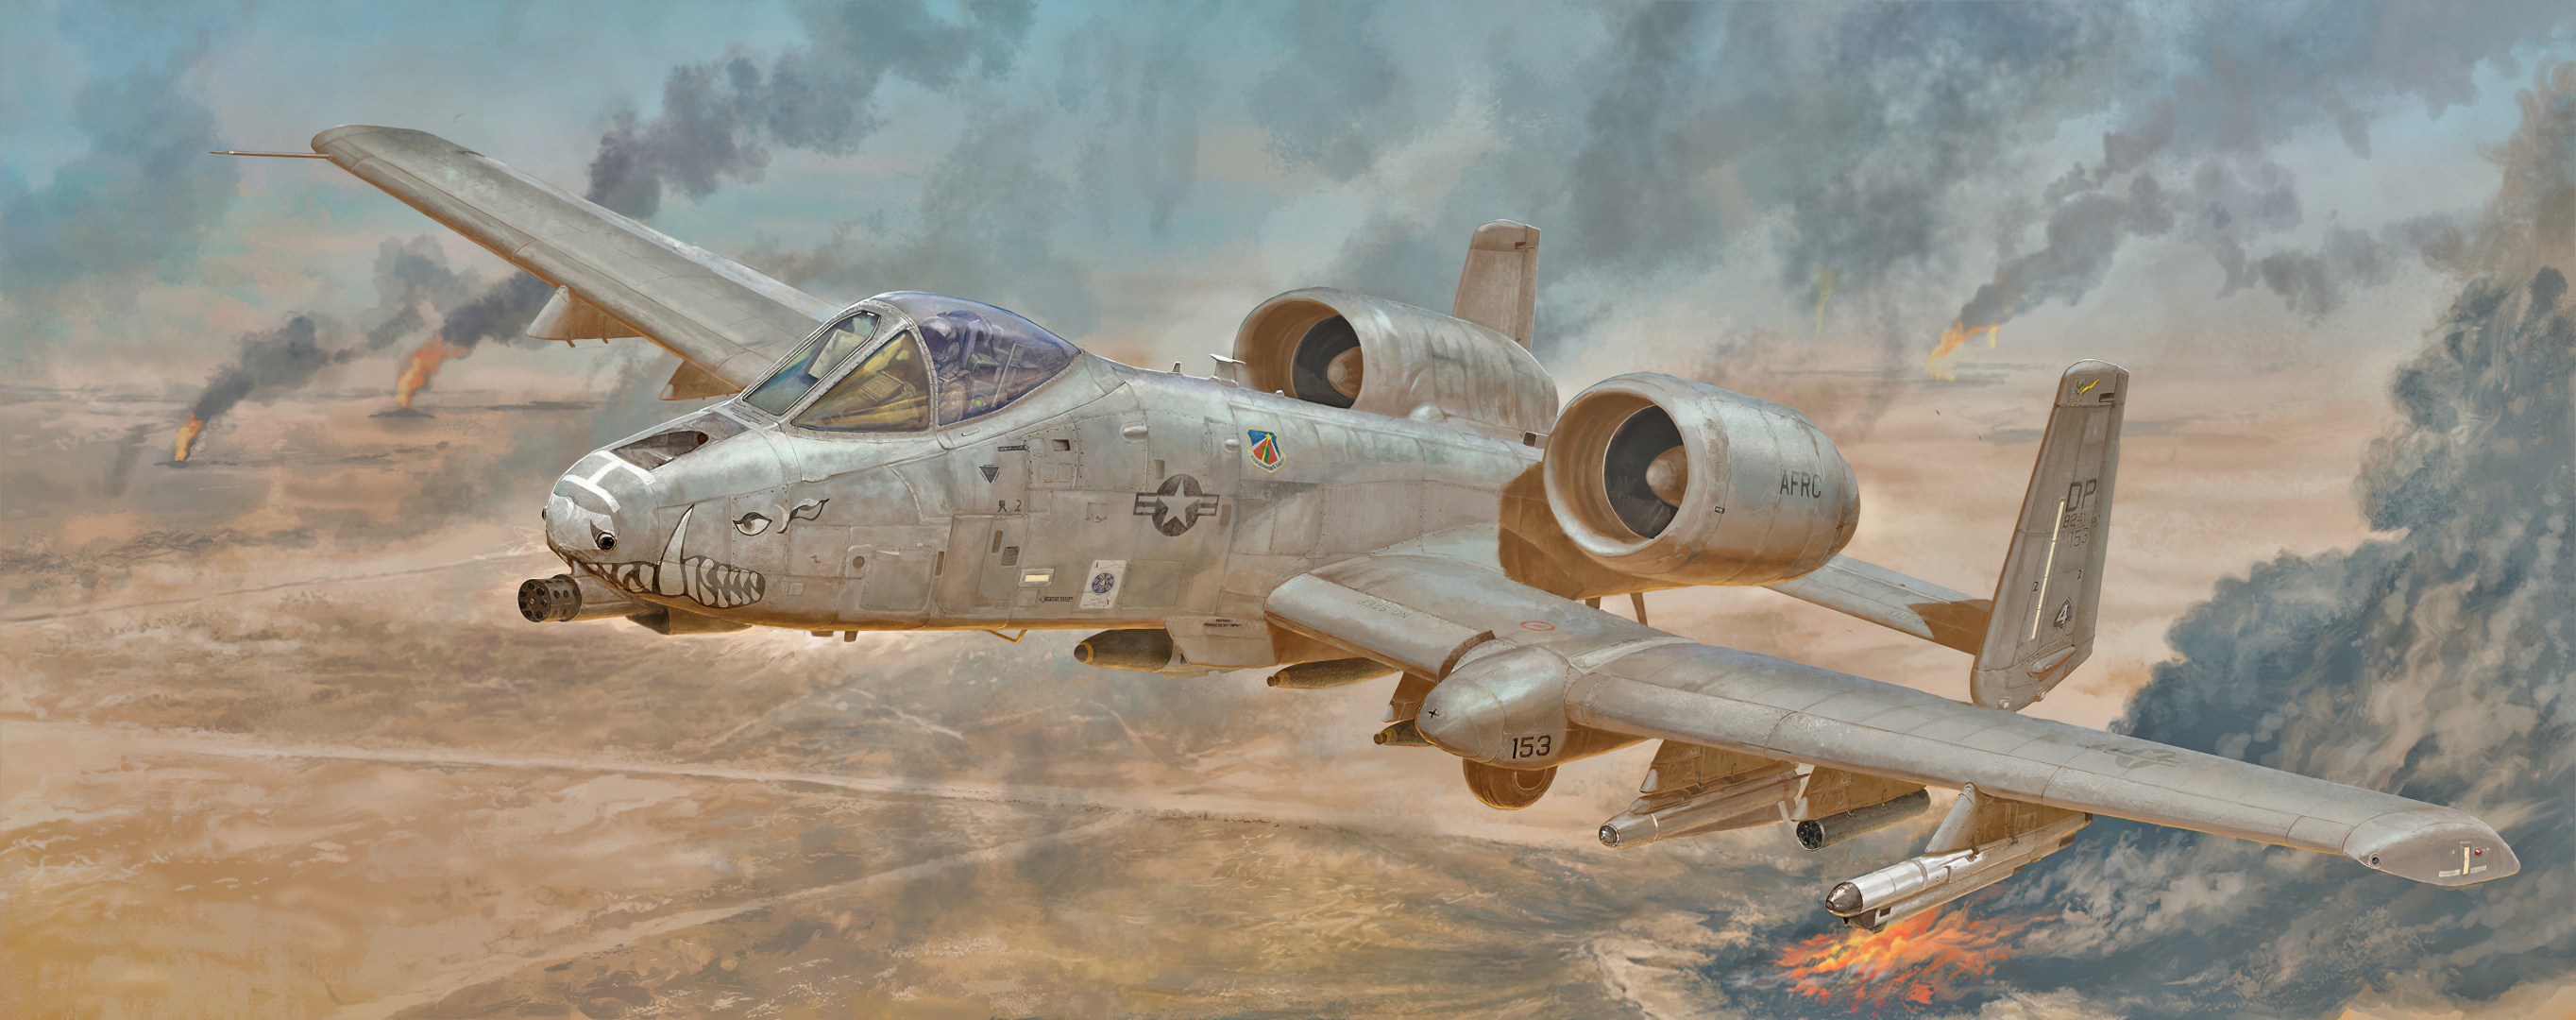 Fairchild Republic A-10 Thunderbolt Ii Wallpapers